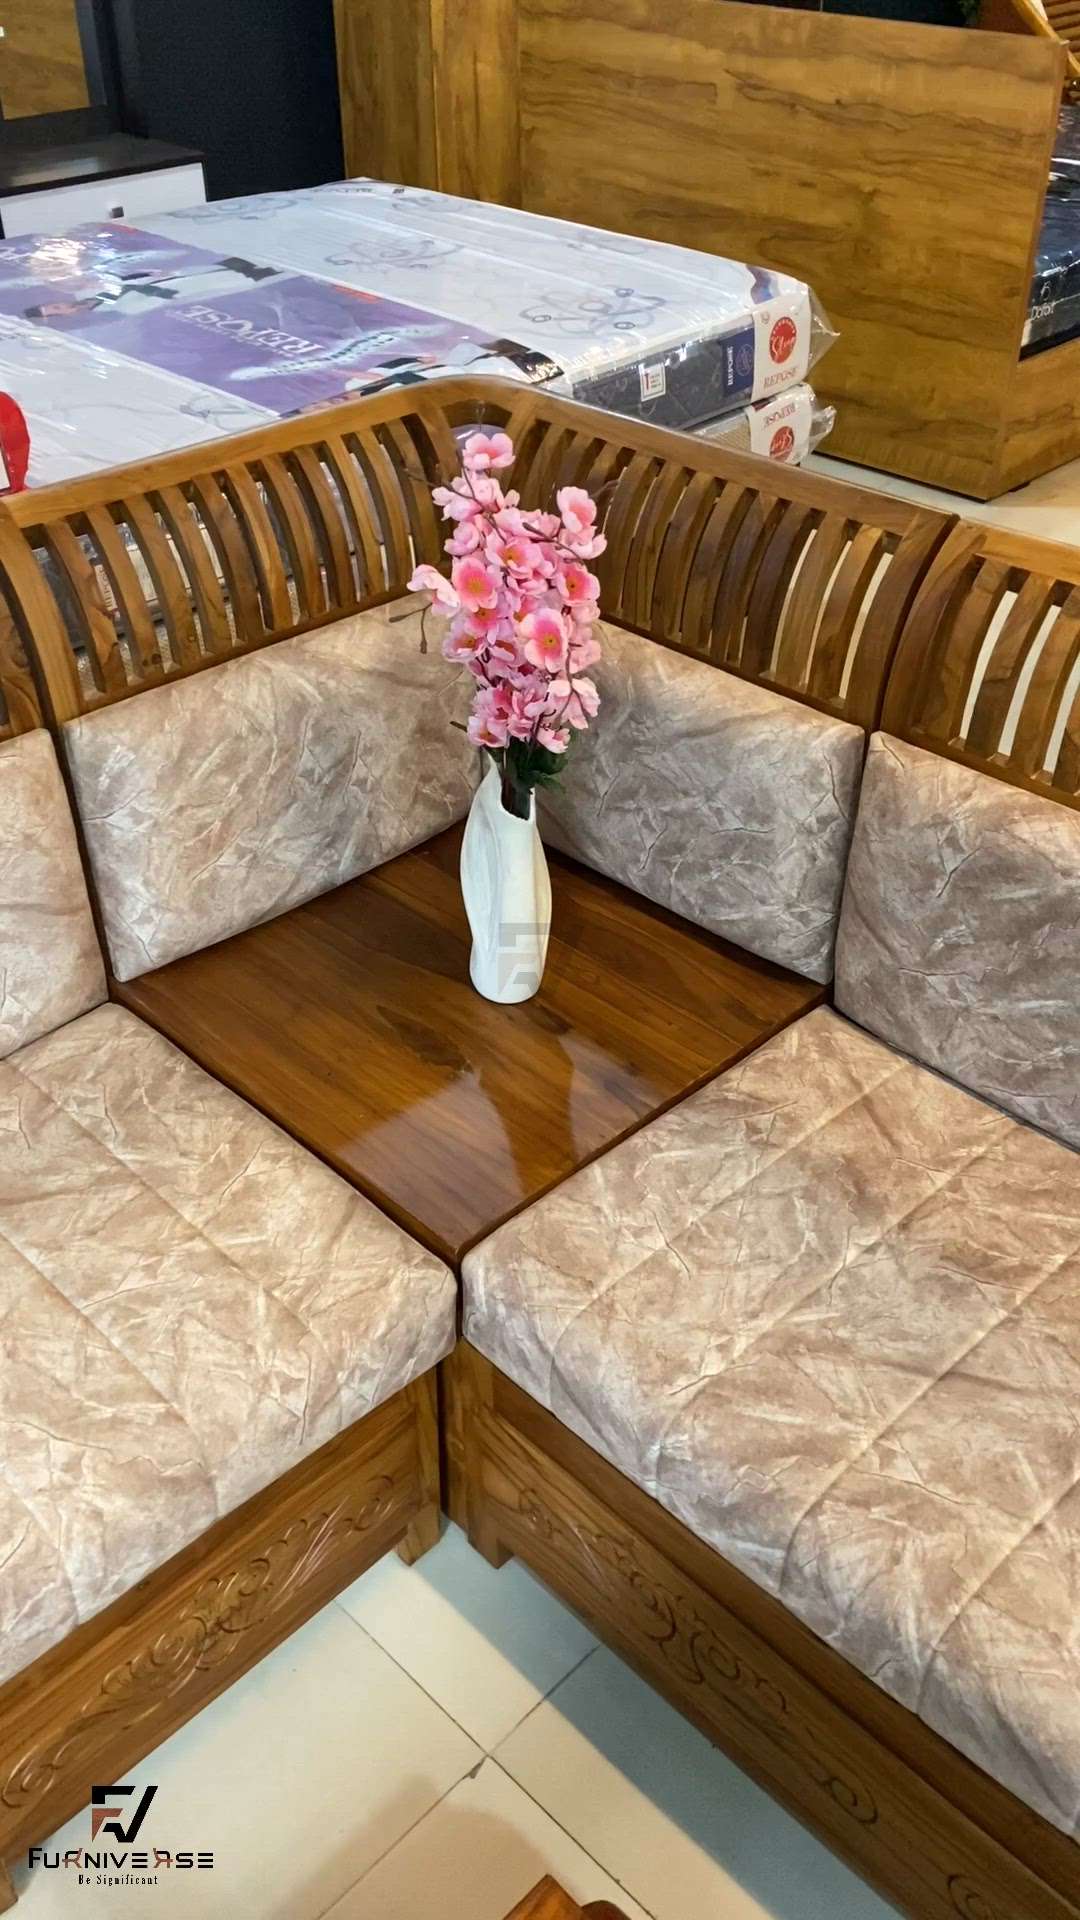 orchid sofa set with two colors.
.
.
.
 #furniture   #Furnishings  #HomeDecor  #home  #teakfurniture  #teakwoodfurniture  #sofa  #sofaset  #woodensofa  #Palakkad  #Coimbatore  #kerala